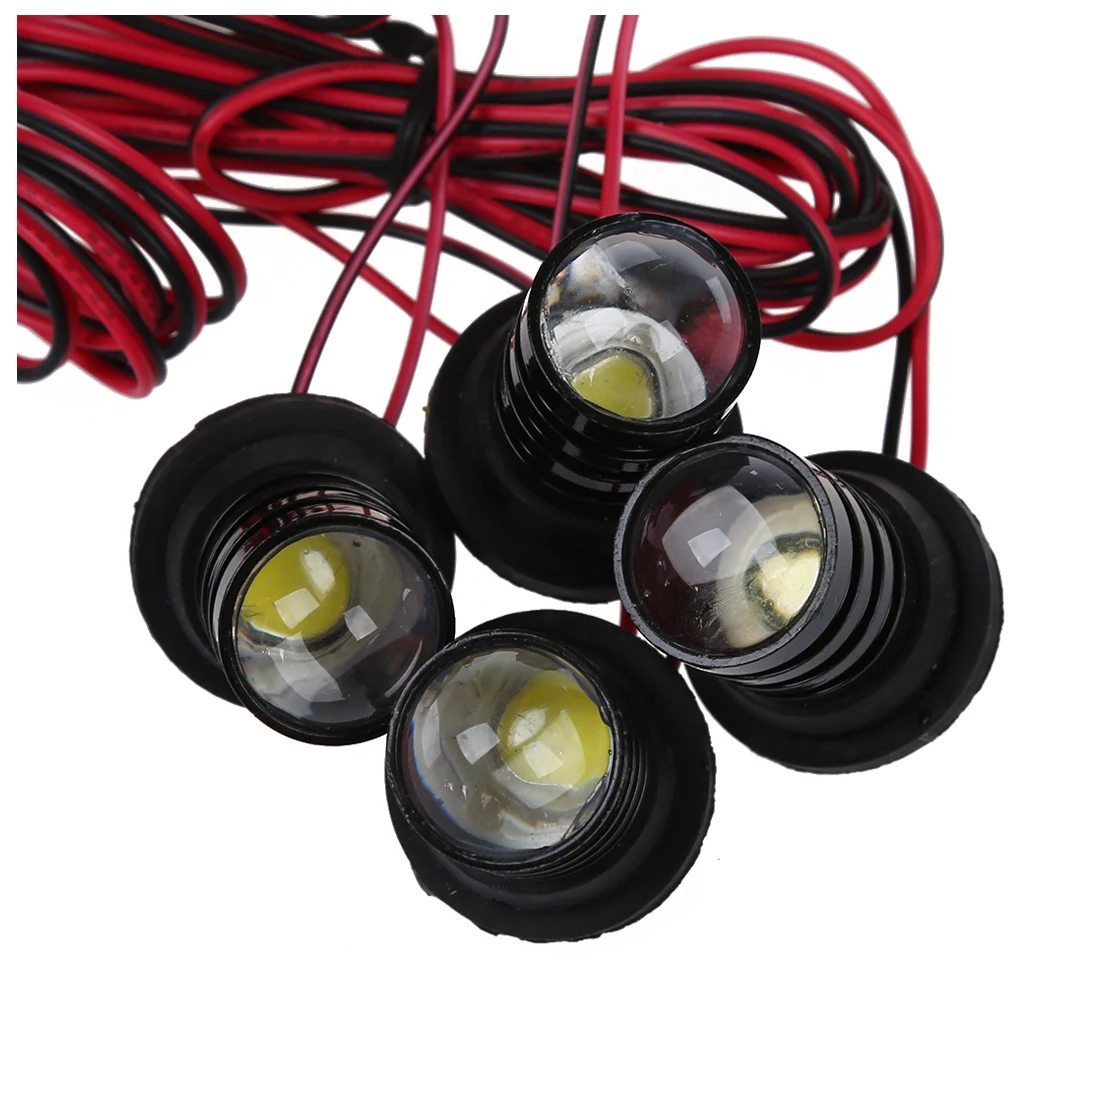 4 PCS LED Stroboscope Car Flashing 4 LED White Light for Car Motorcycle Waterproof Drop Shopping